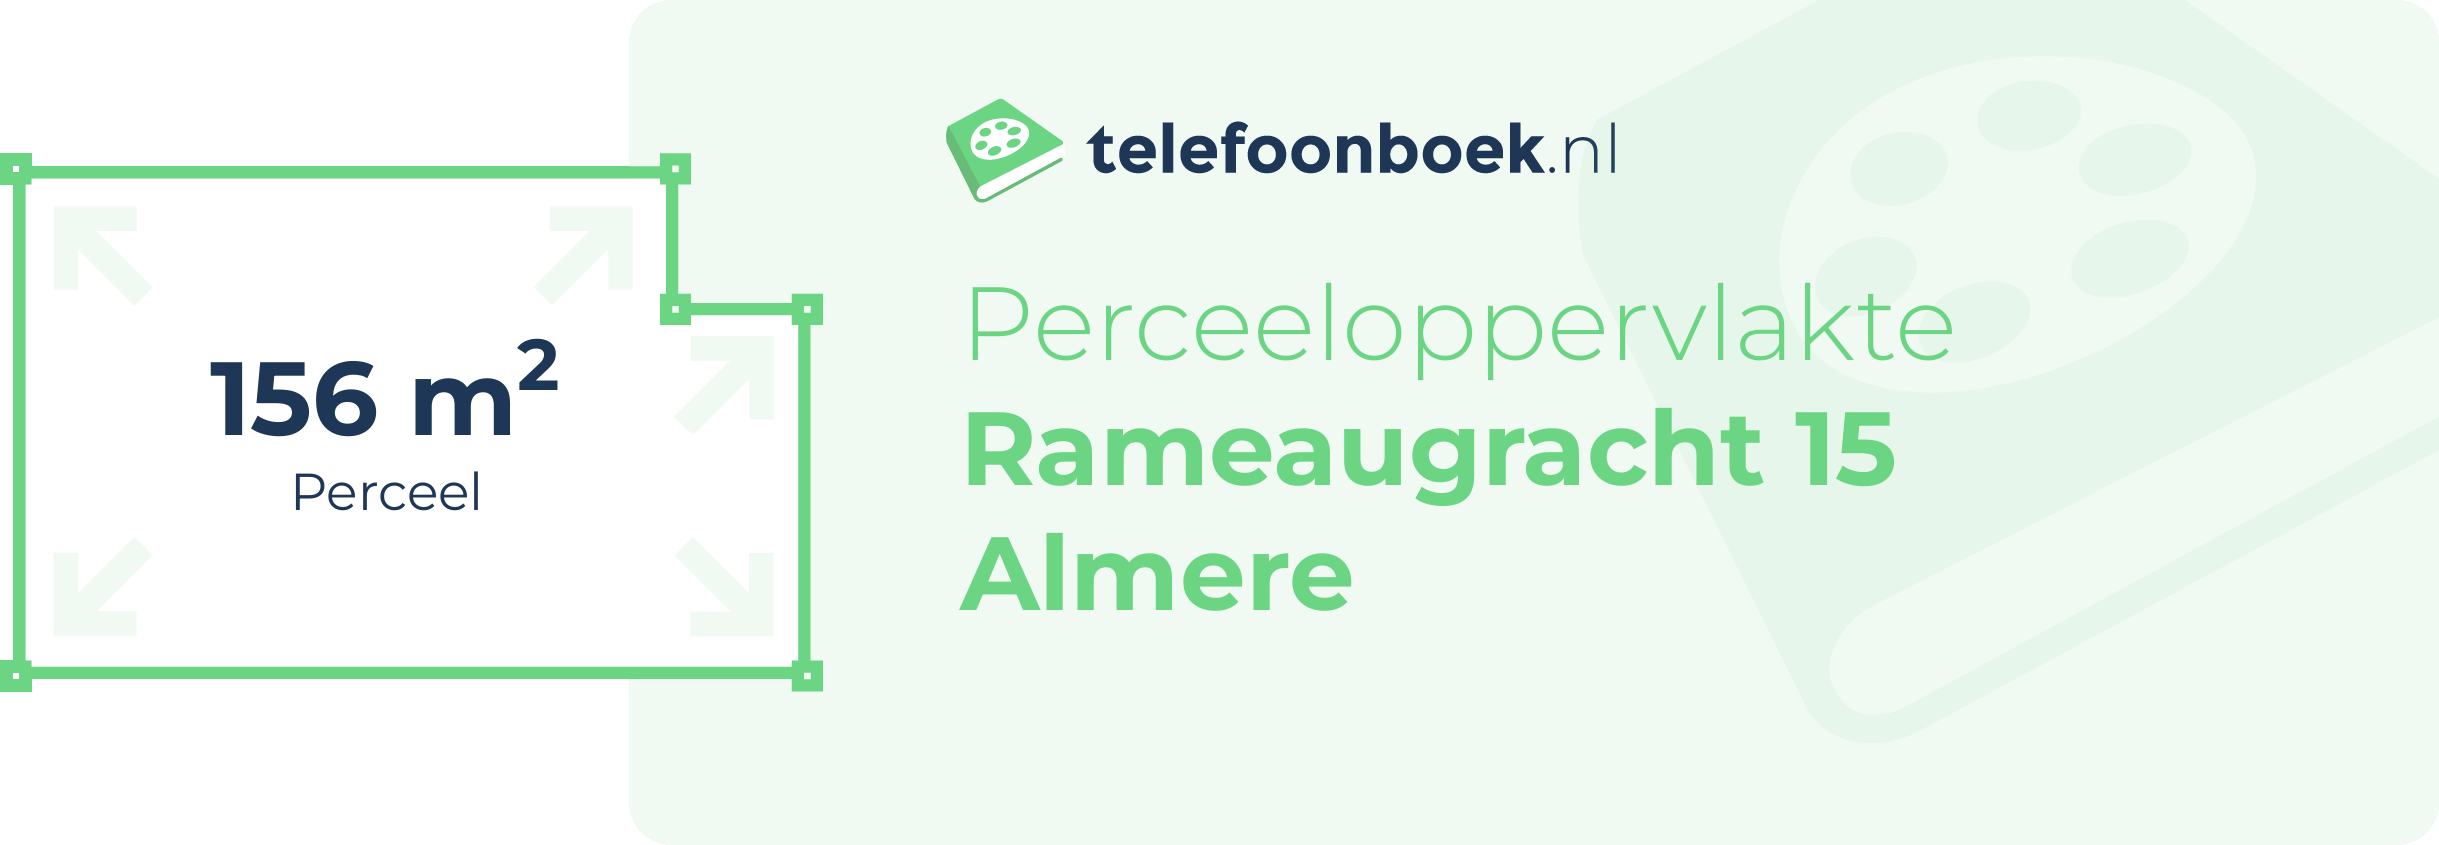 Perceeloppervlakte Rameaugracht 15 Almere